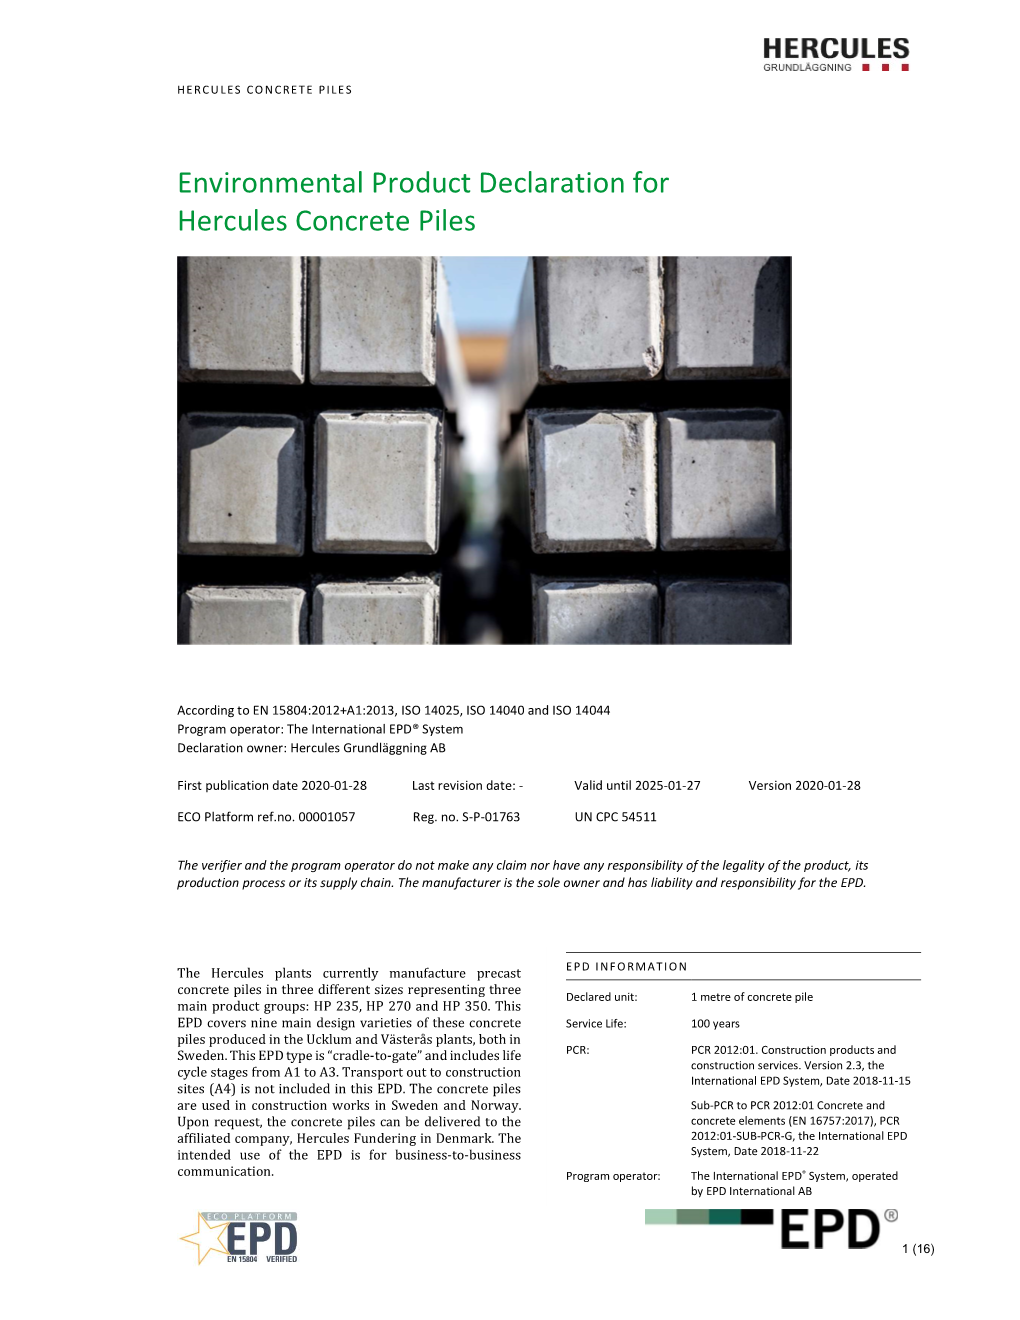 Environmental Product Declaration for Hercules Concrete Piles